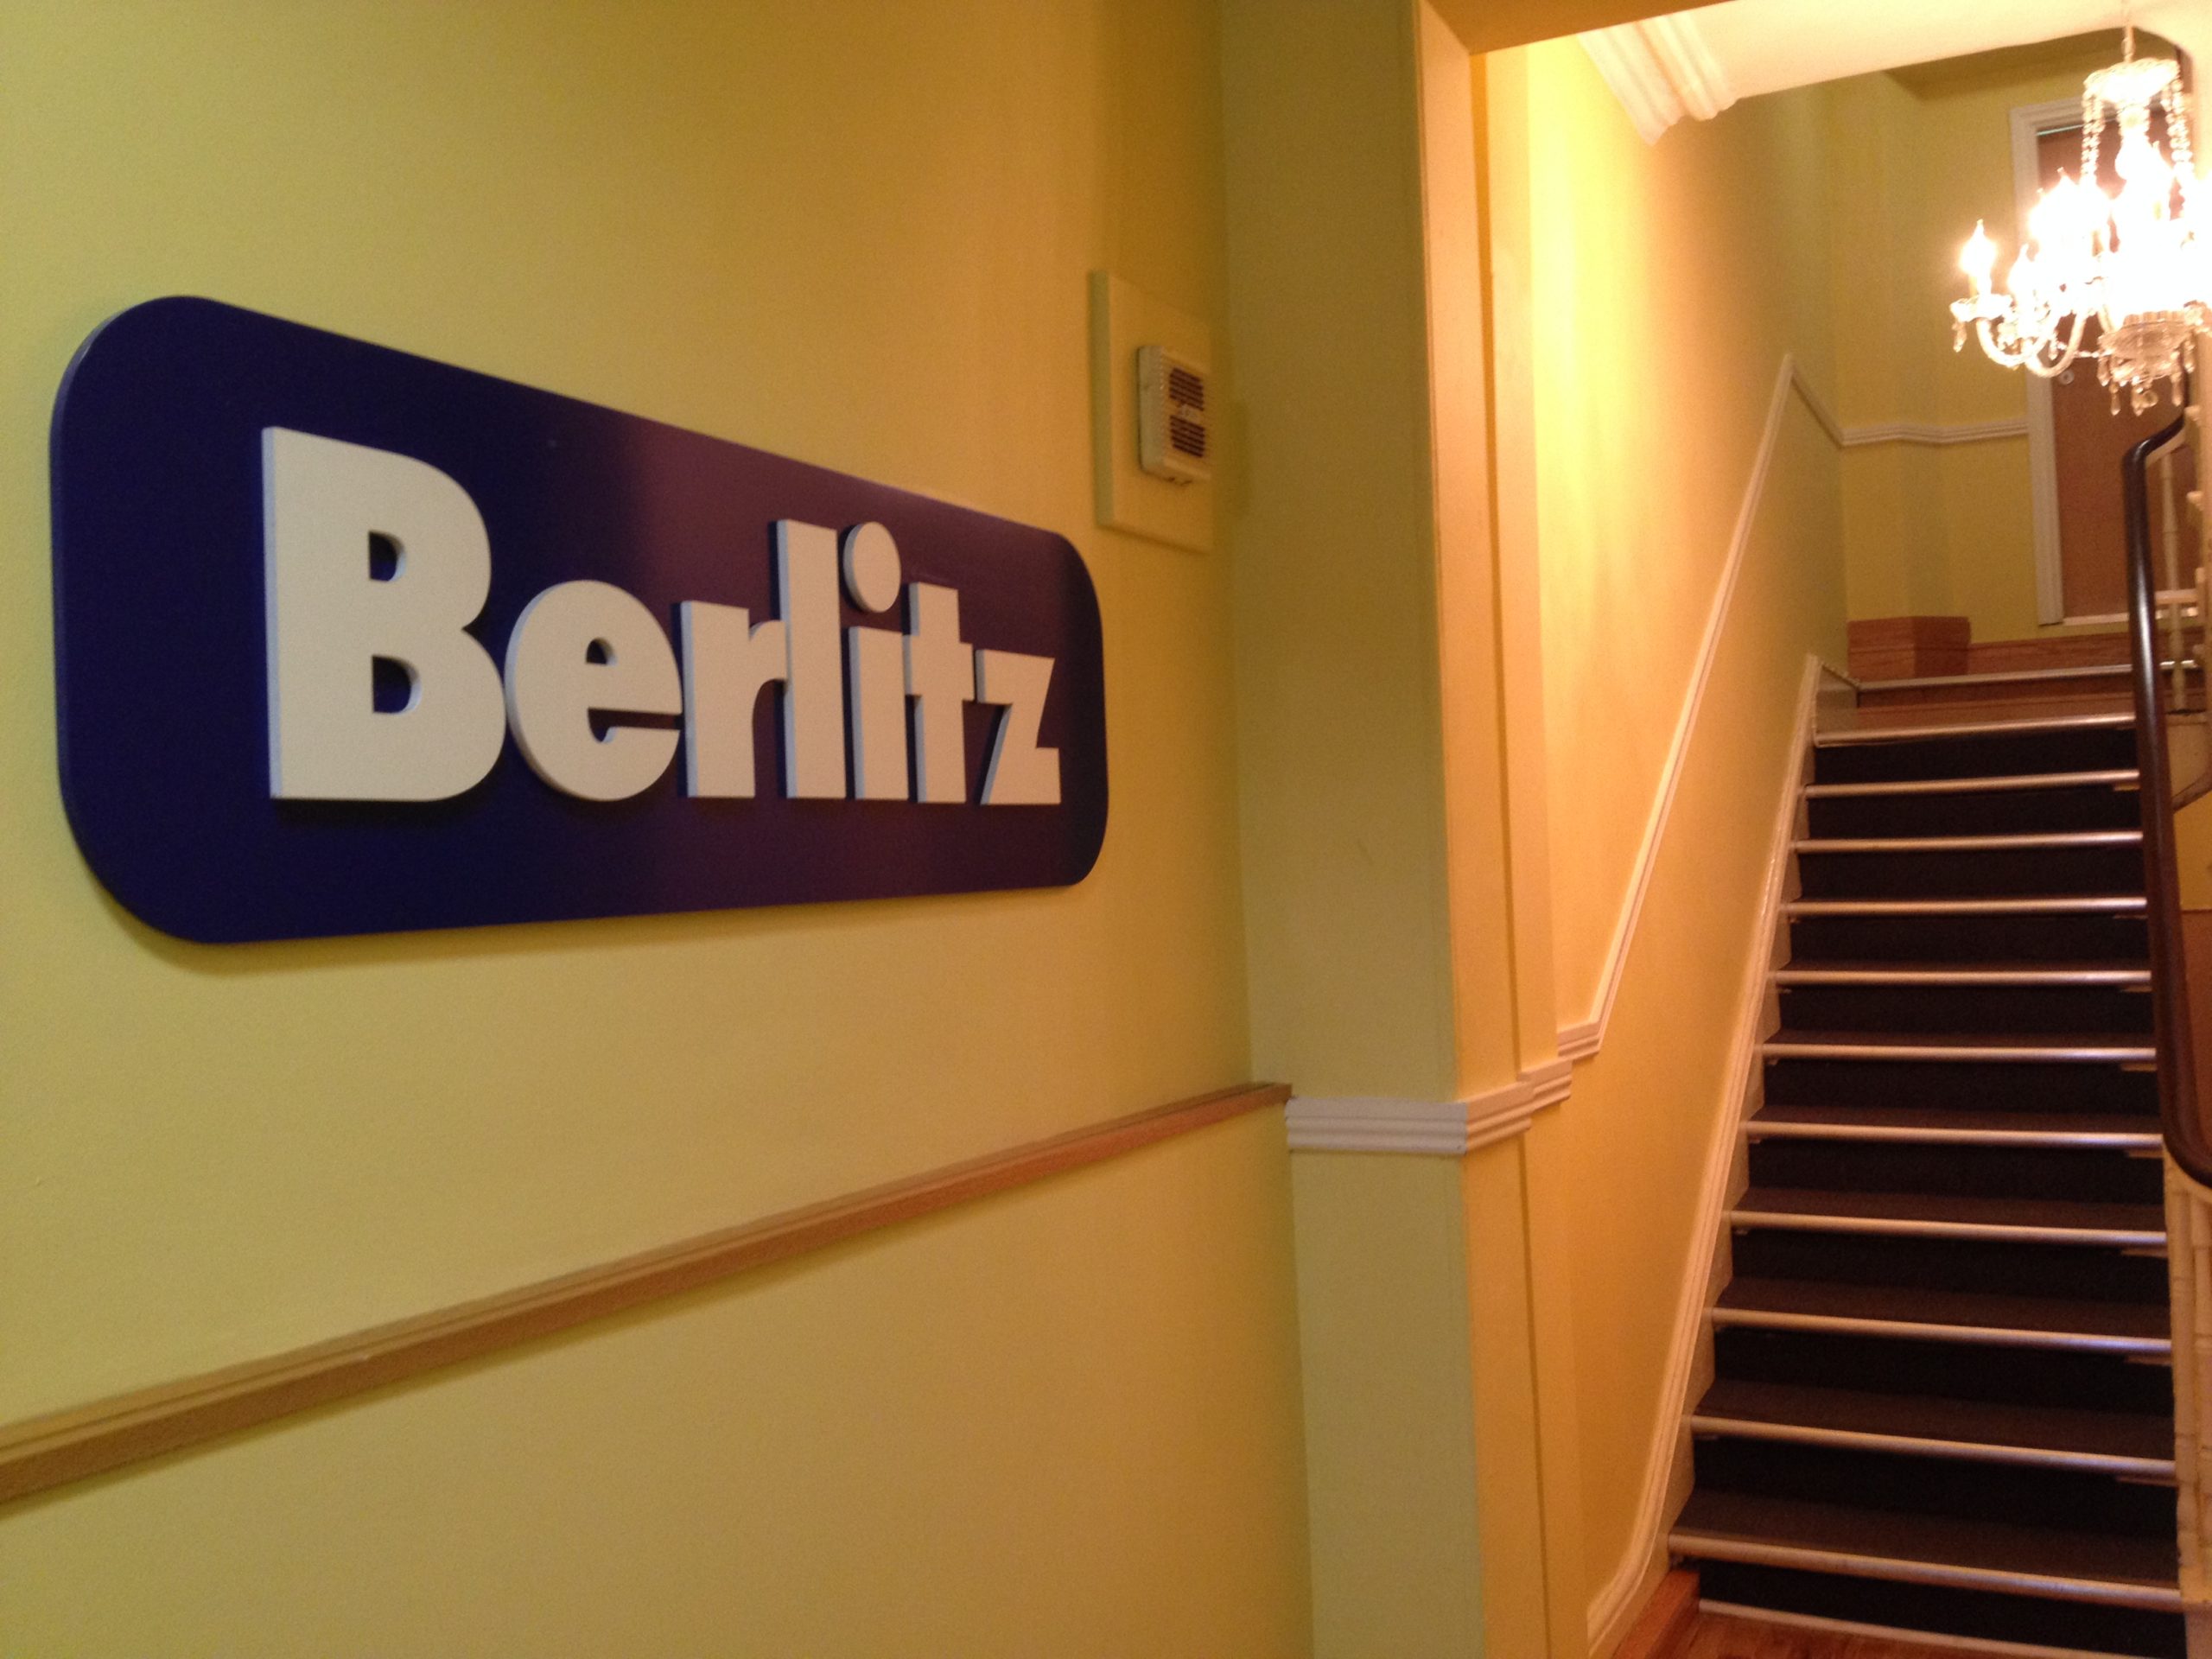 berlitz school logo on wall